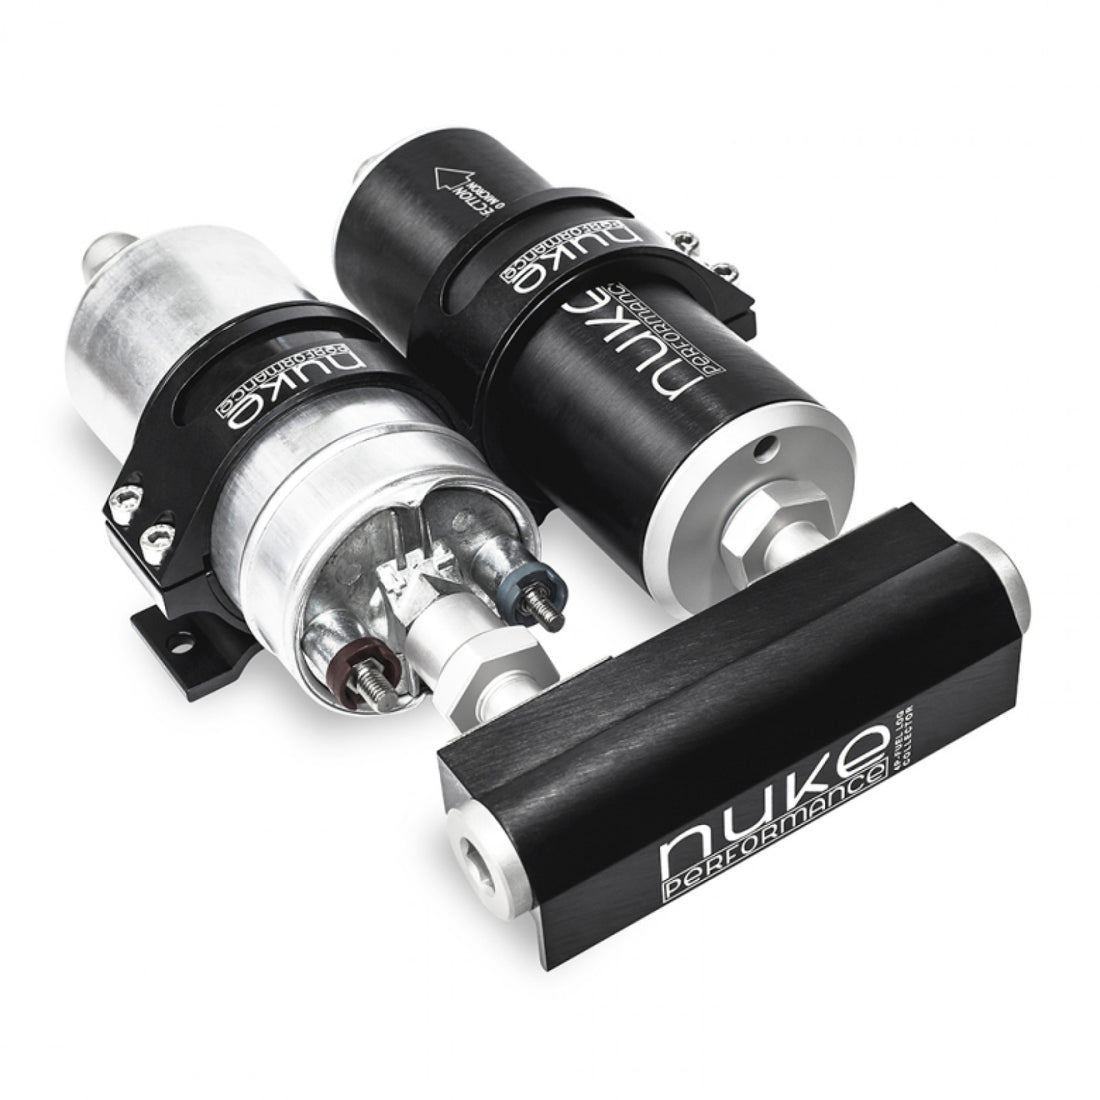 Nuke Performance 4-Port Fuel Log Collector for Bosch 044 Fuel Pump and Nuke Fuel Filter Slim